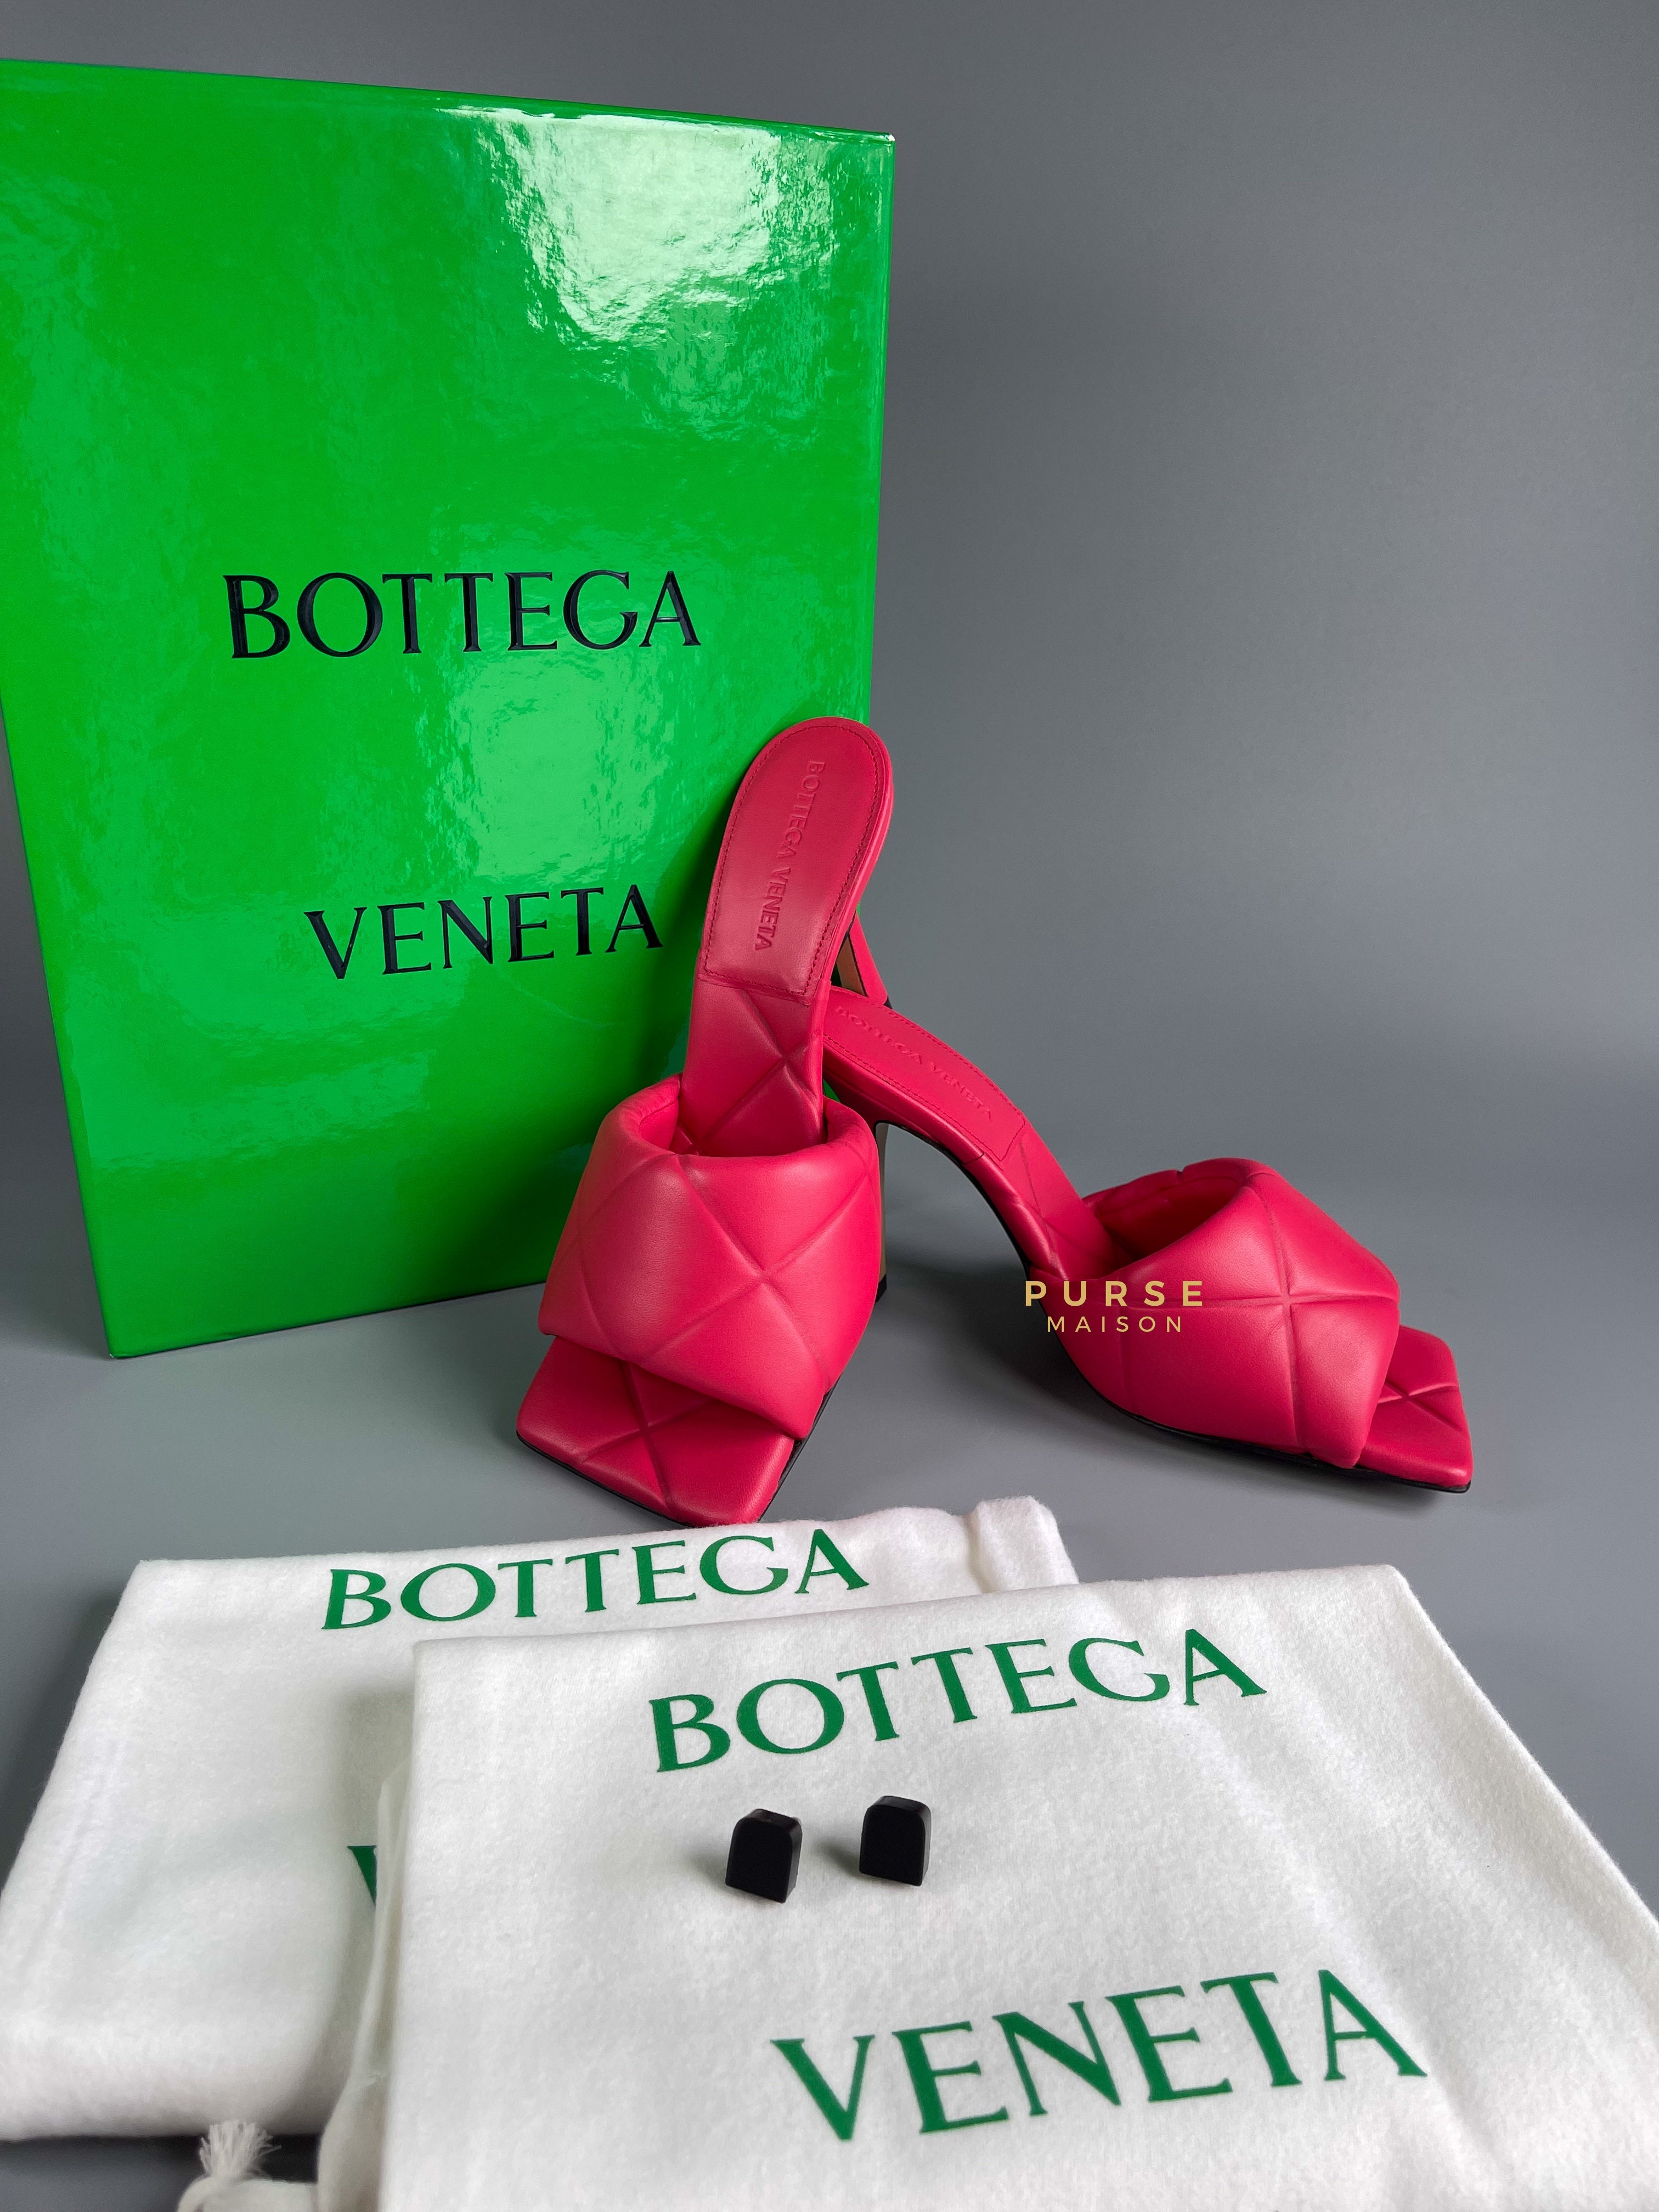 Bottega Veneta The Rubber Libo Quilted Embossed Lagoon Nappa Rose Pink Sandals (Size 36 EU, 23.5cm) | Purse Maison Luxury Bags Shop